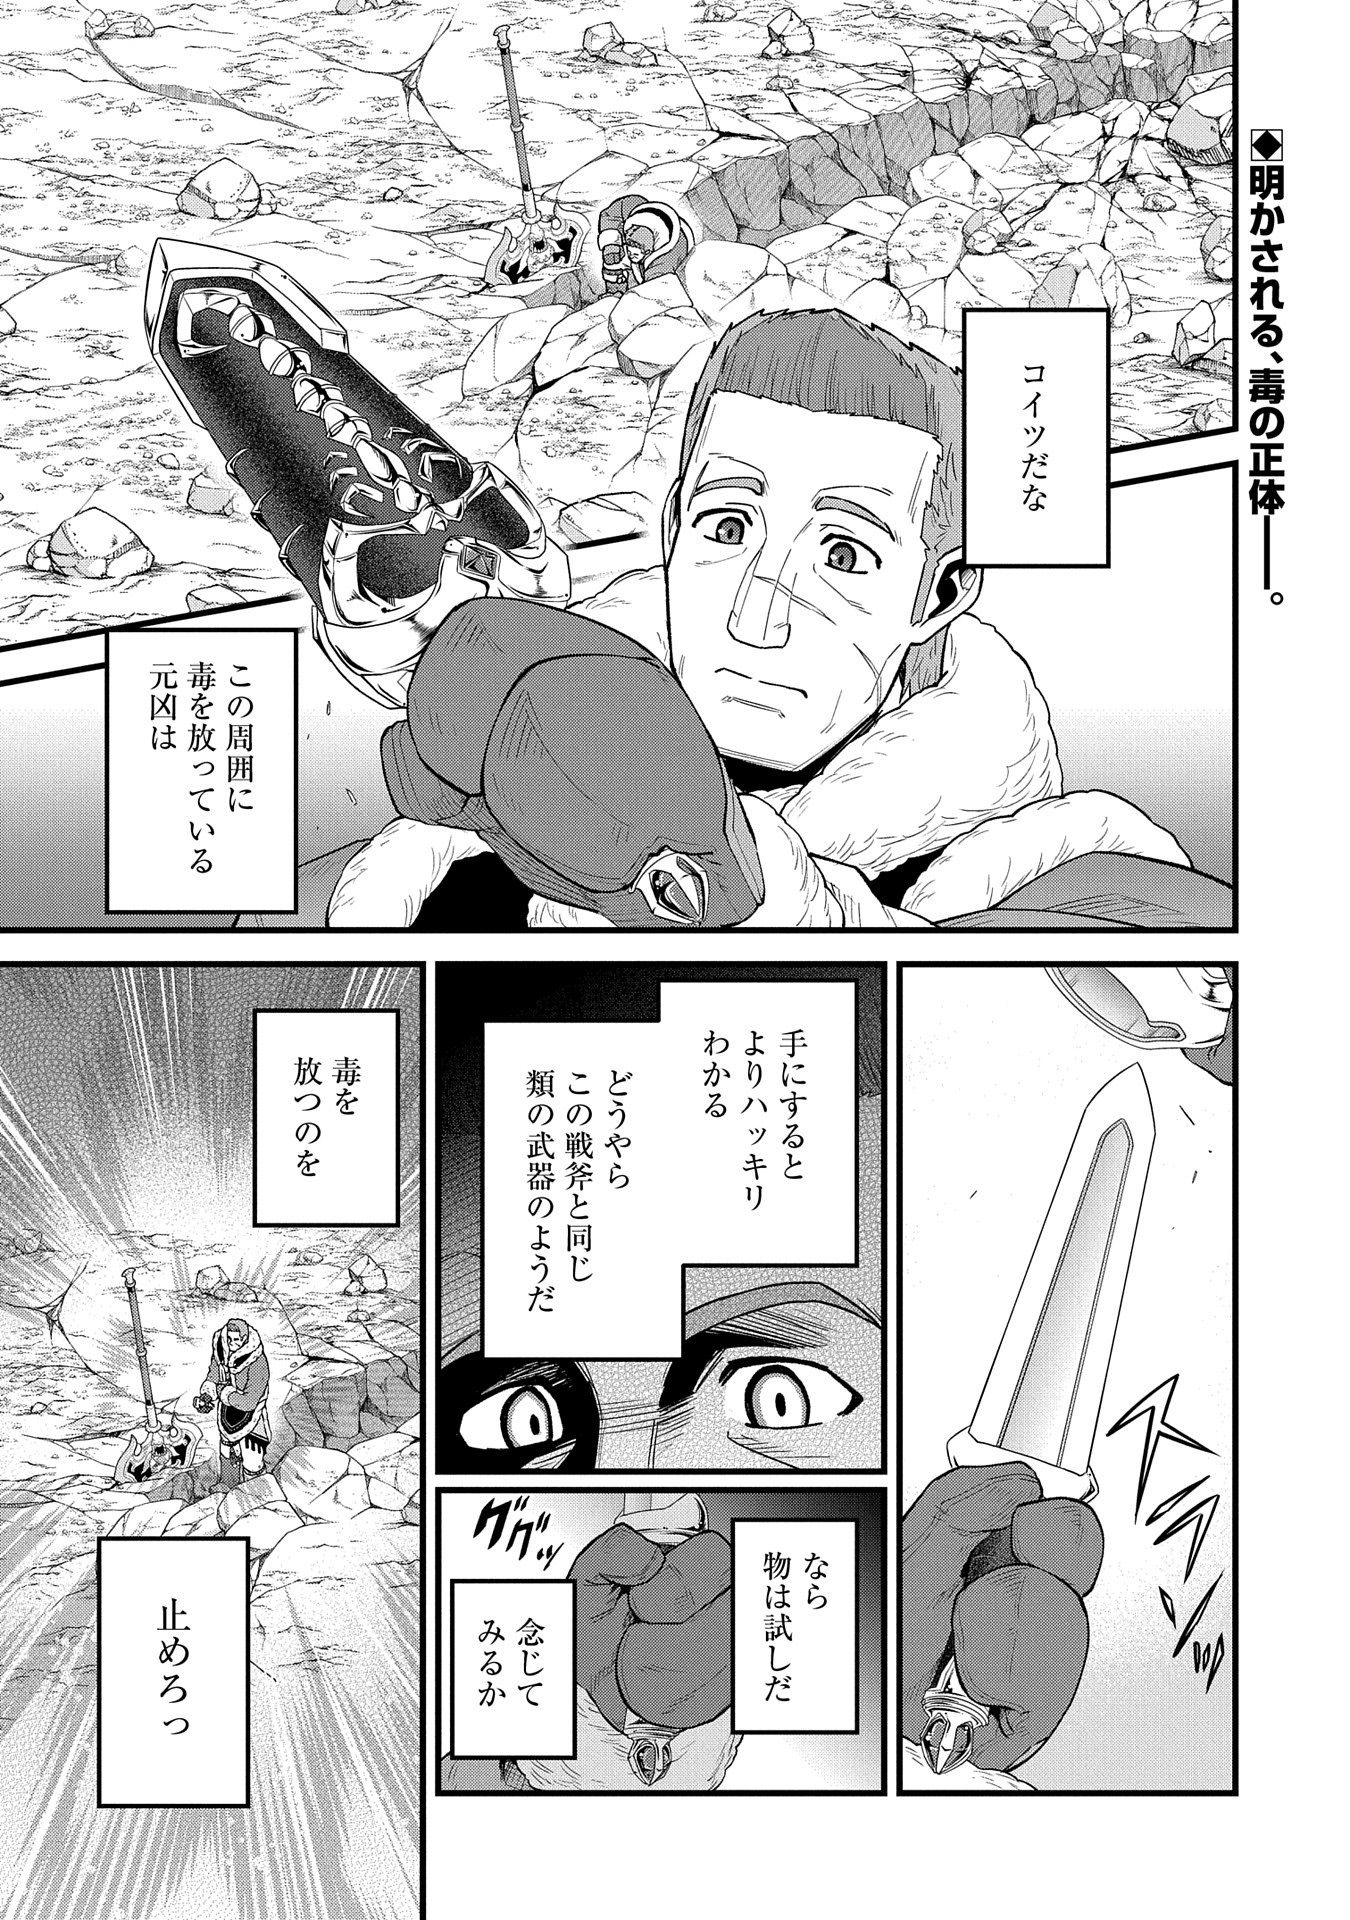 Ryoumin 0-nin Start no Henkyou Ryoushusama - Chapter 53 - Page 1